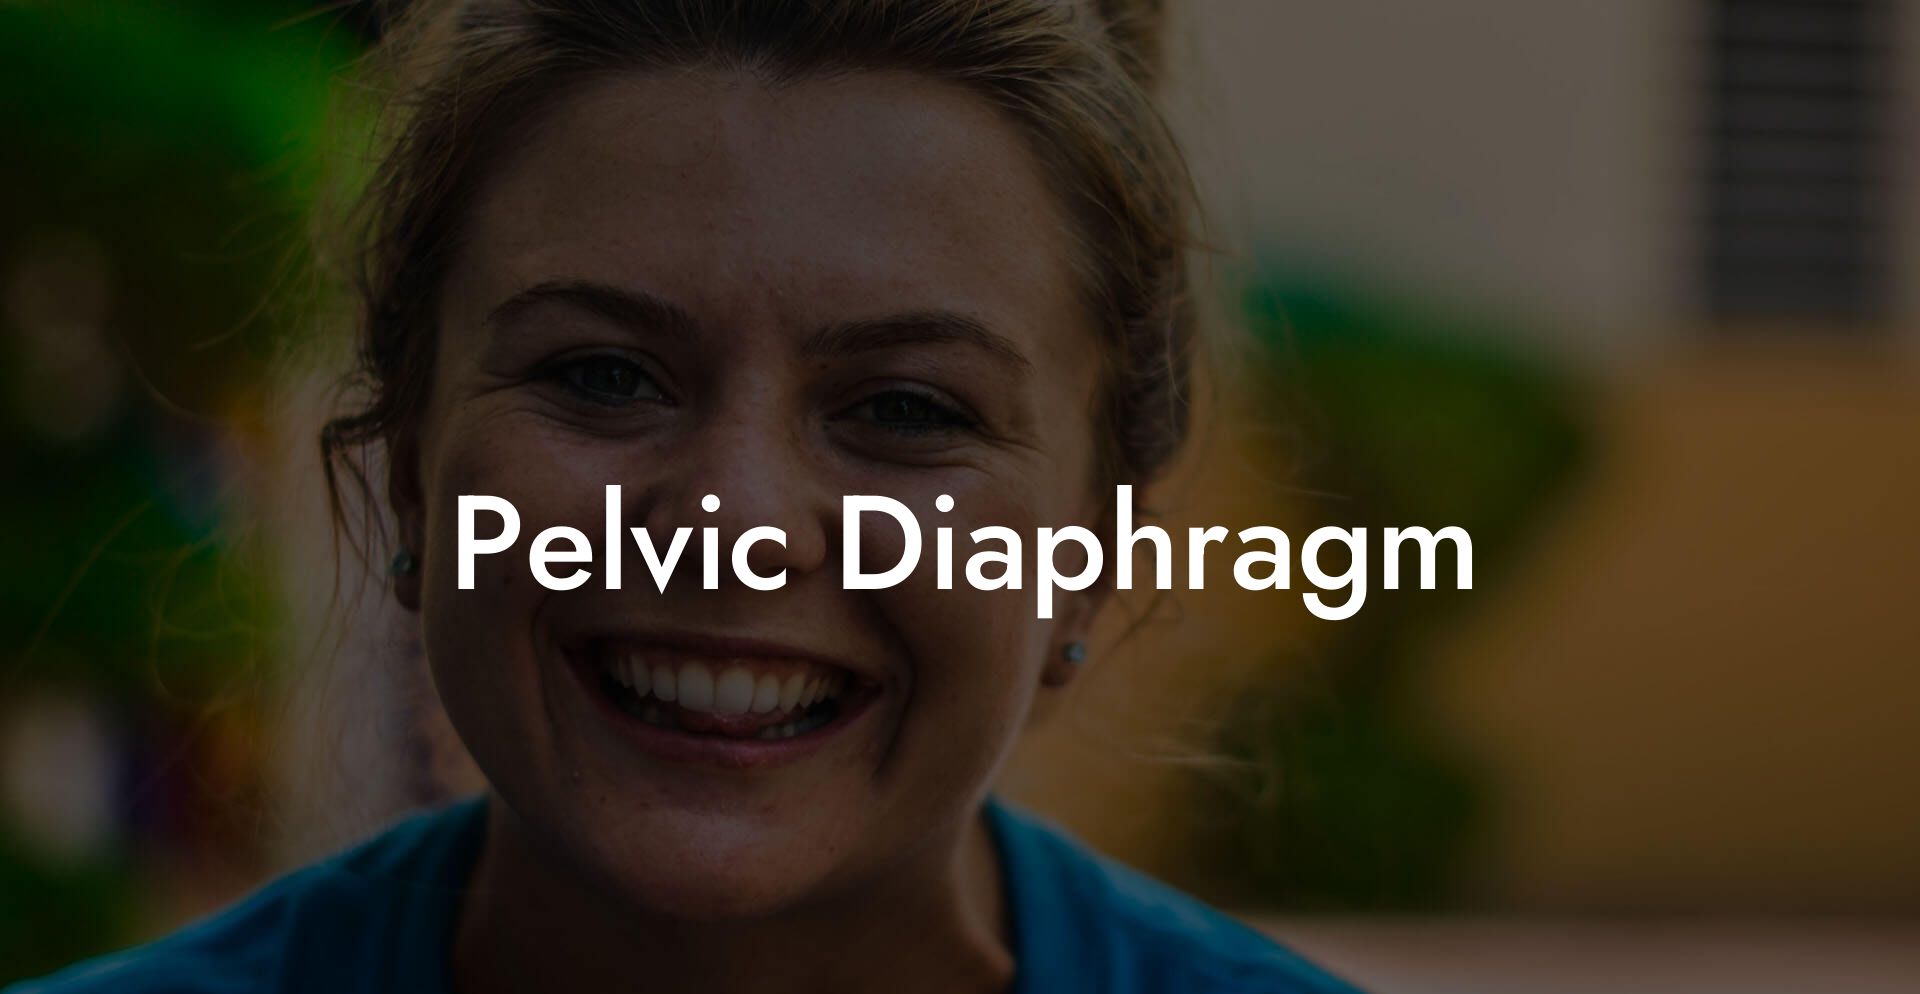 Pelvic Diaphragm